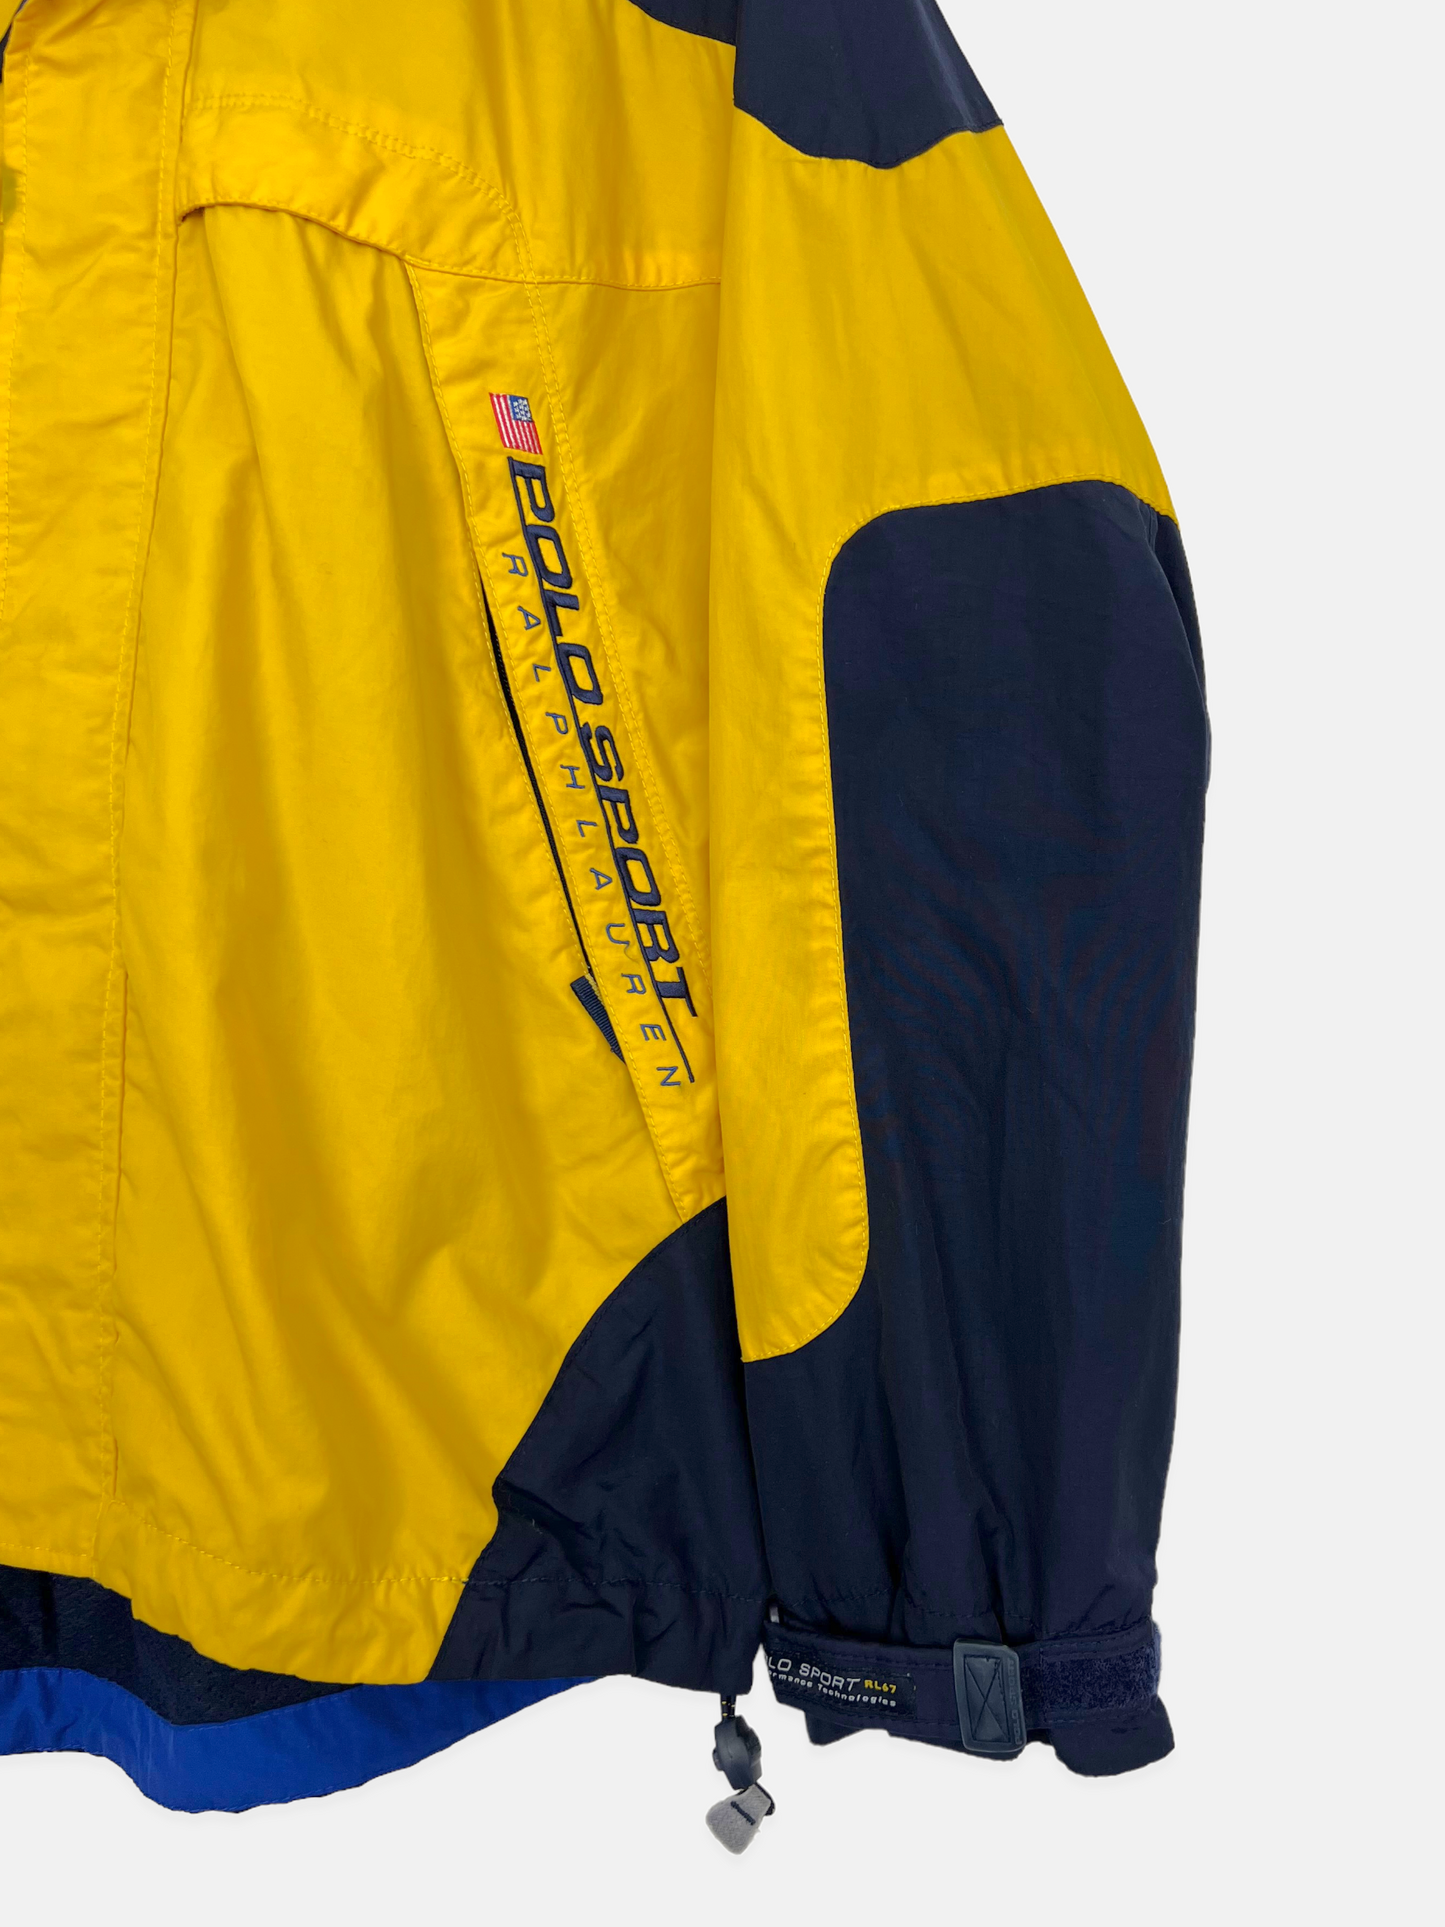 90's Polo Sport Ralph Lauren Embroidered Vintage Jacket Size L